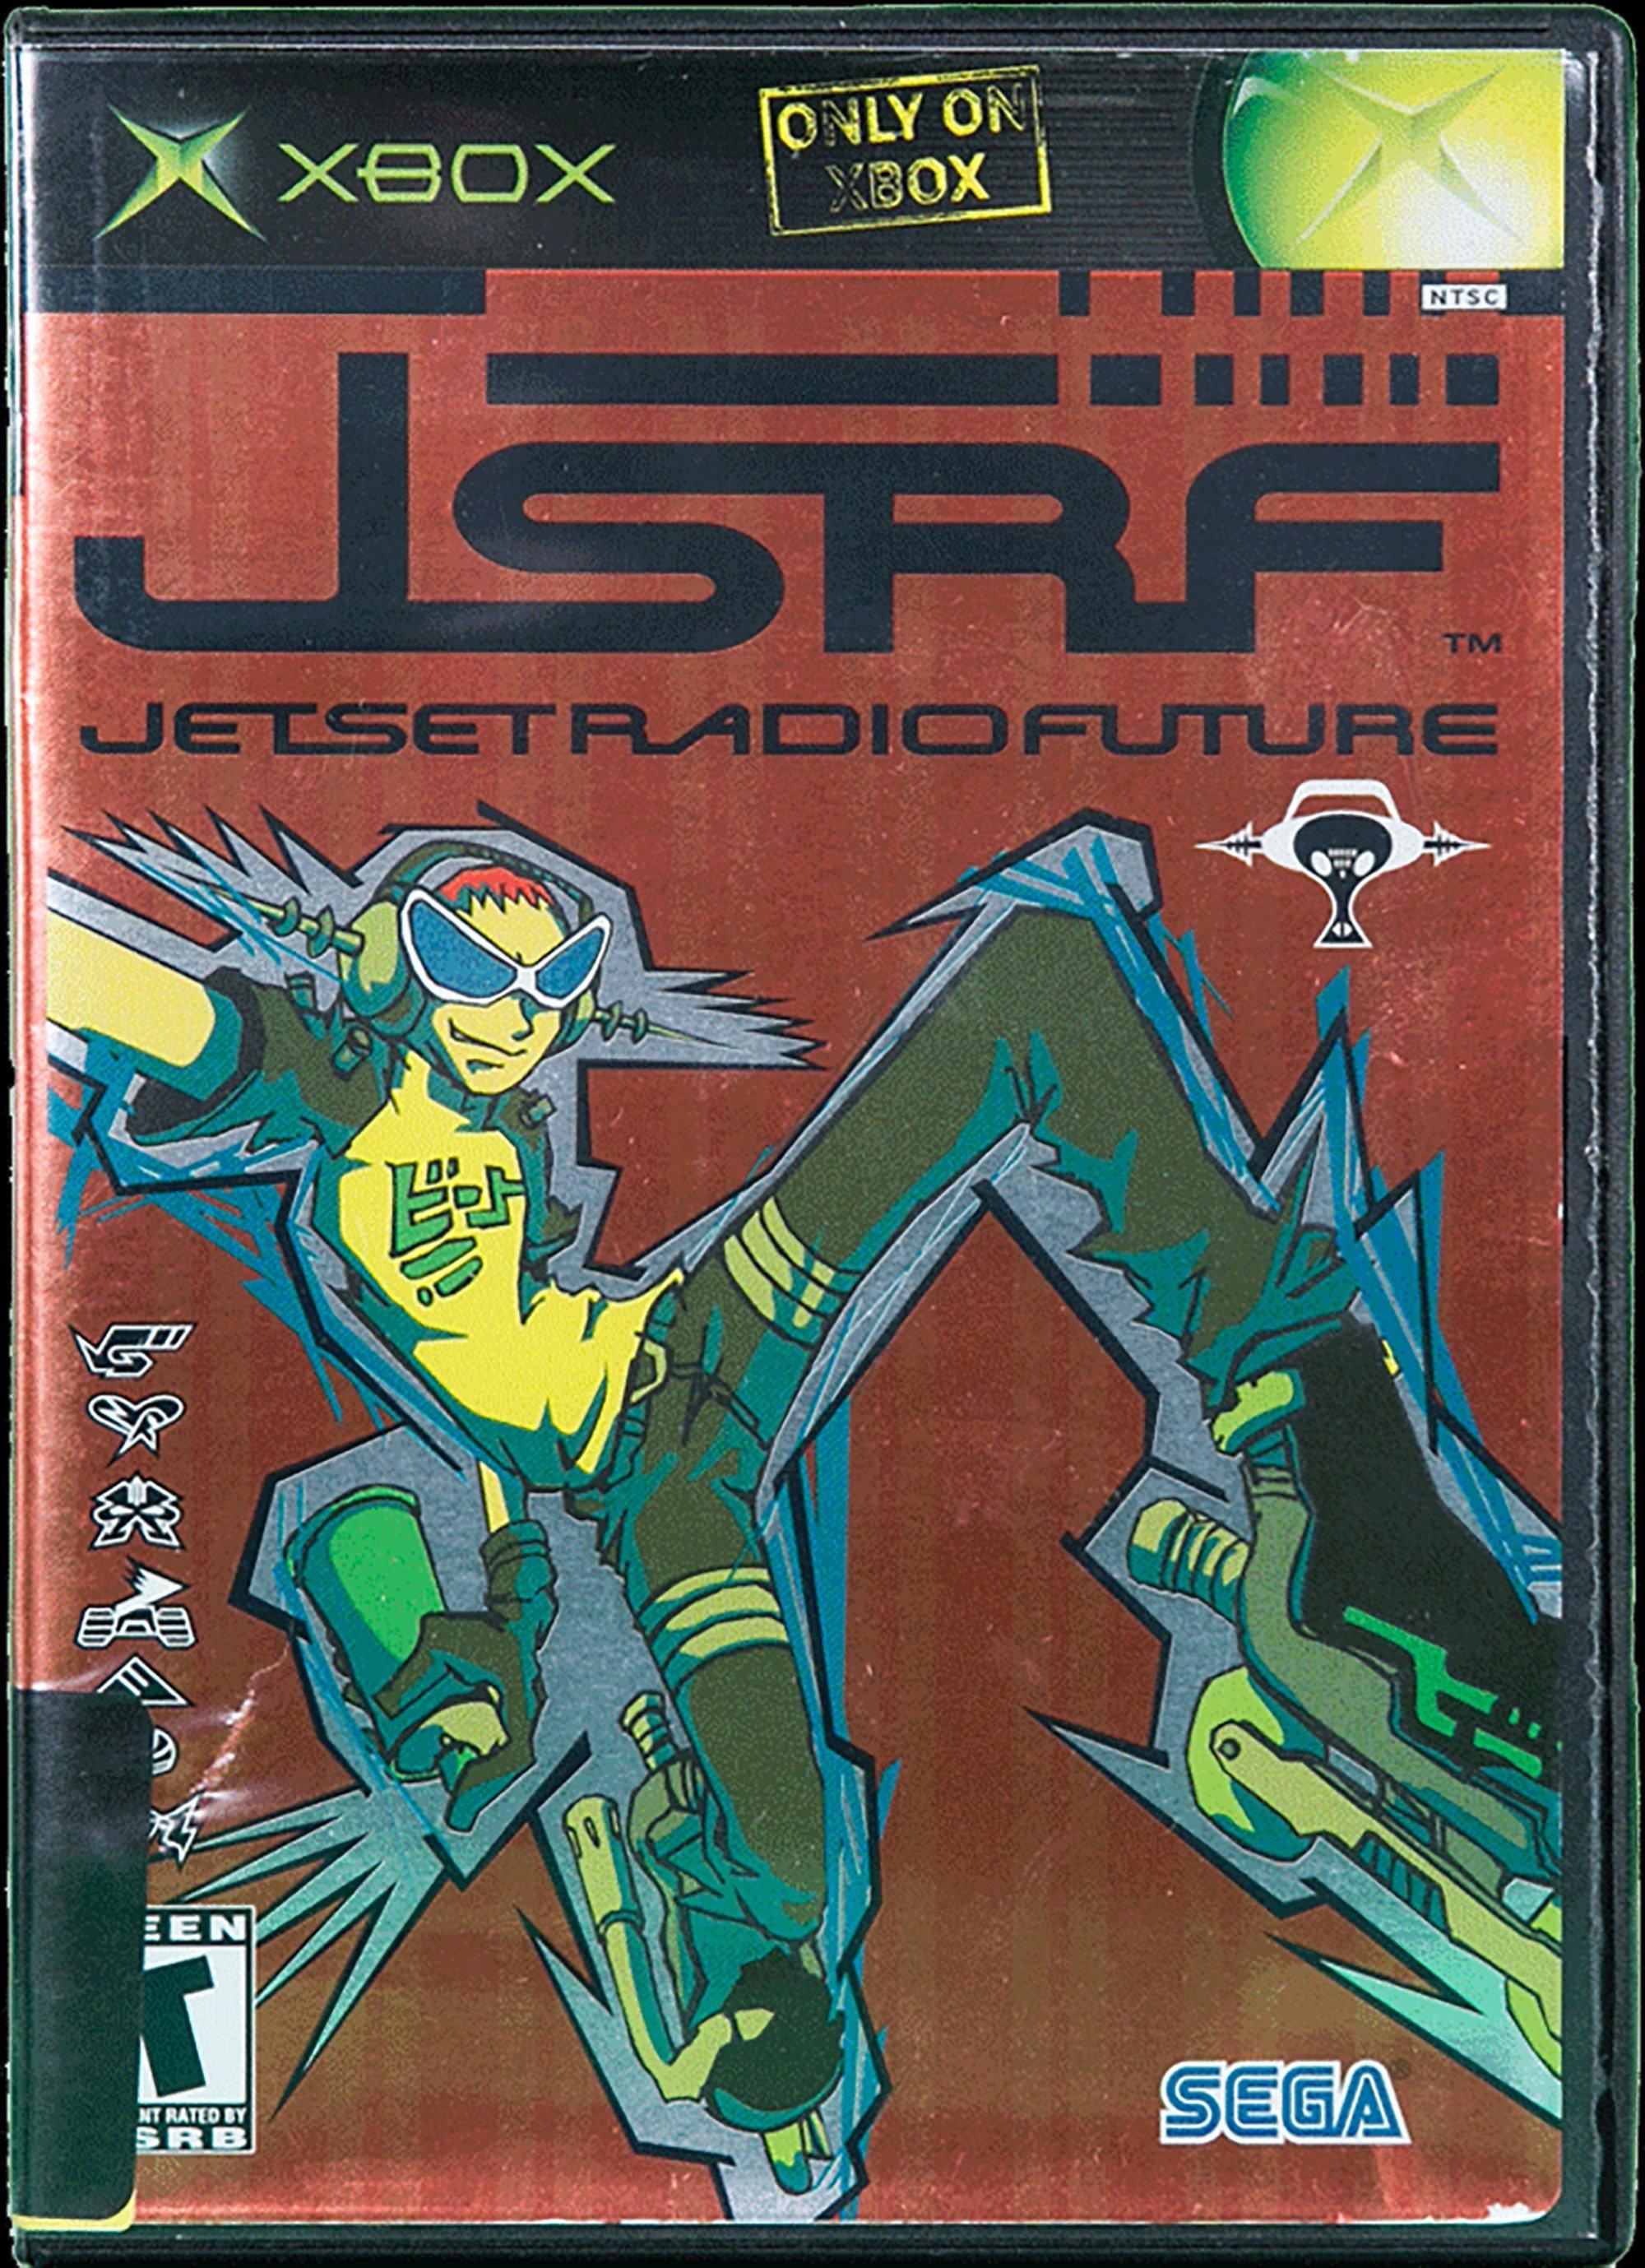 jet set radio future backwards compatible xbox 360